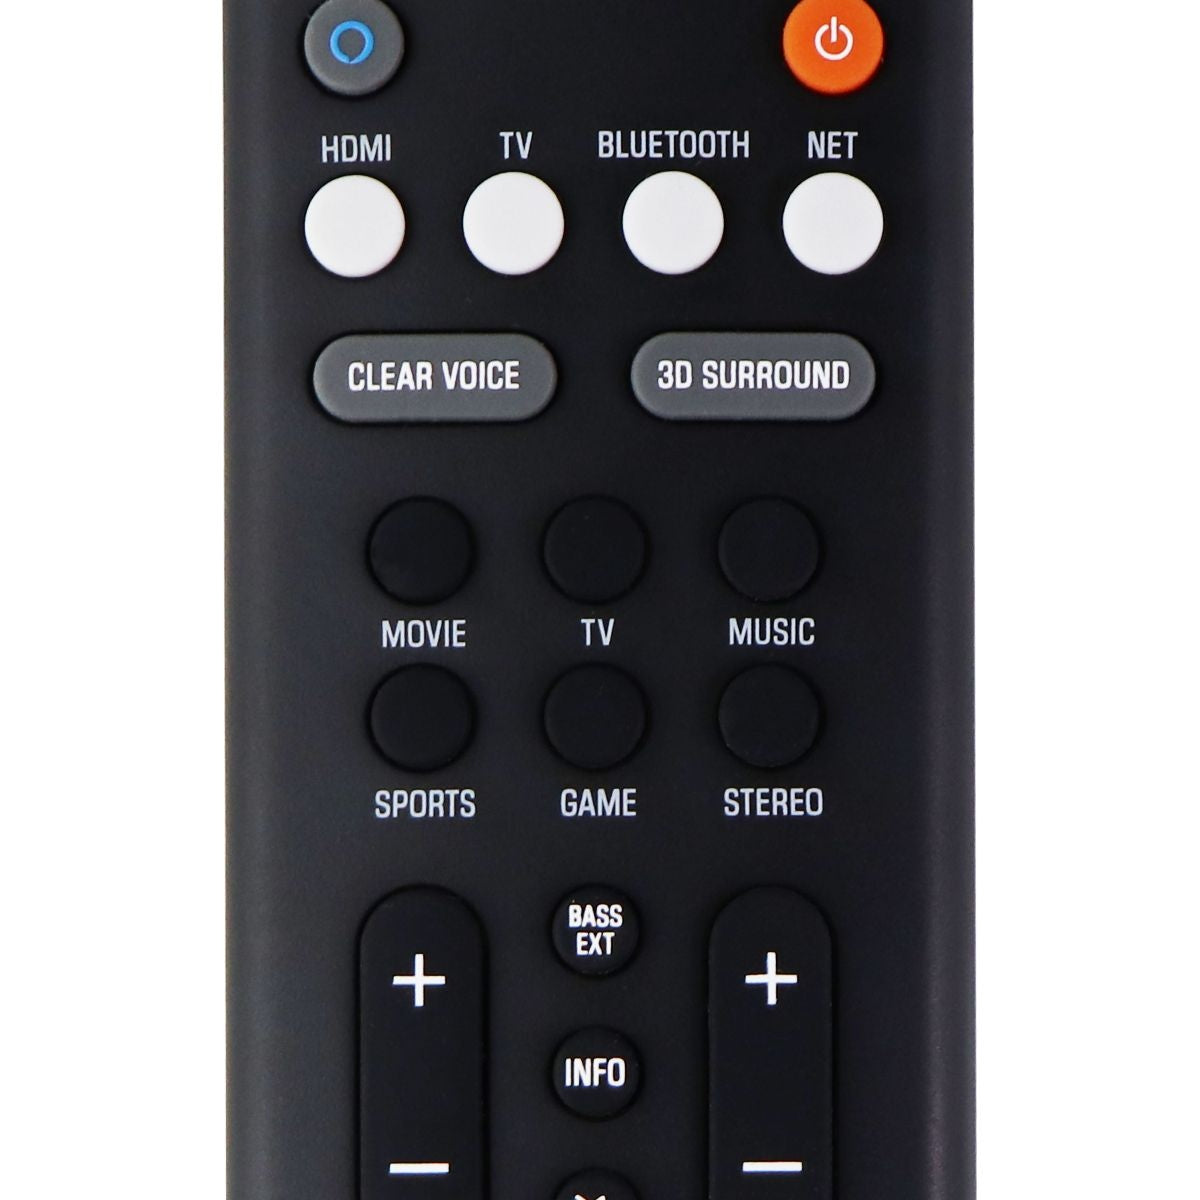 Yamaha Remote Control (VCQ9130 / VCQ9140) for Yamaha Sound Bars - Black